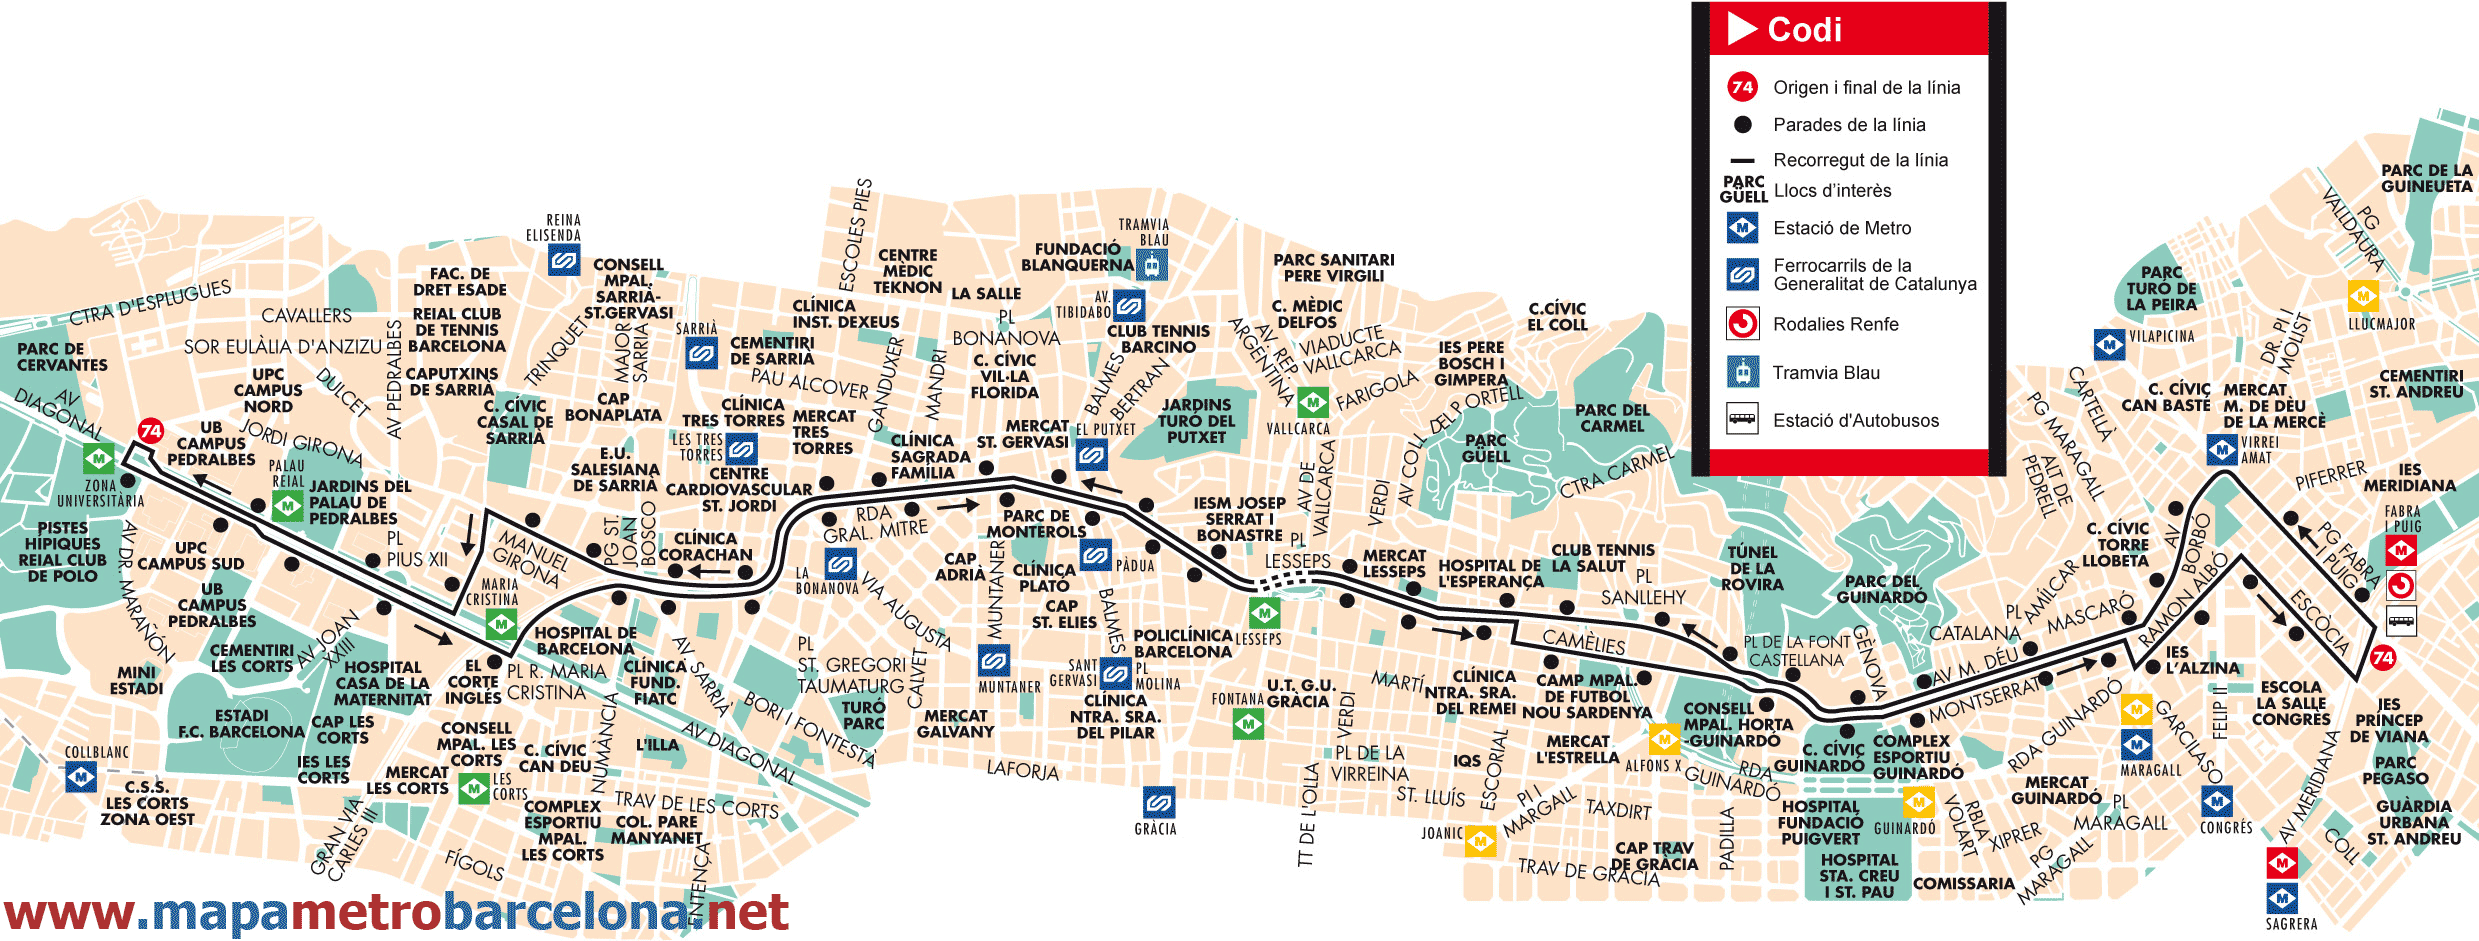 Barcelona bus map line 74